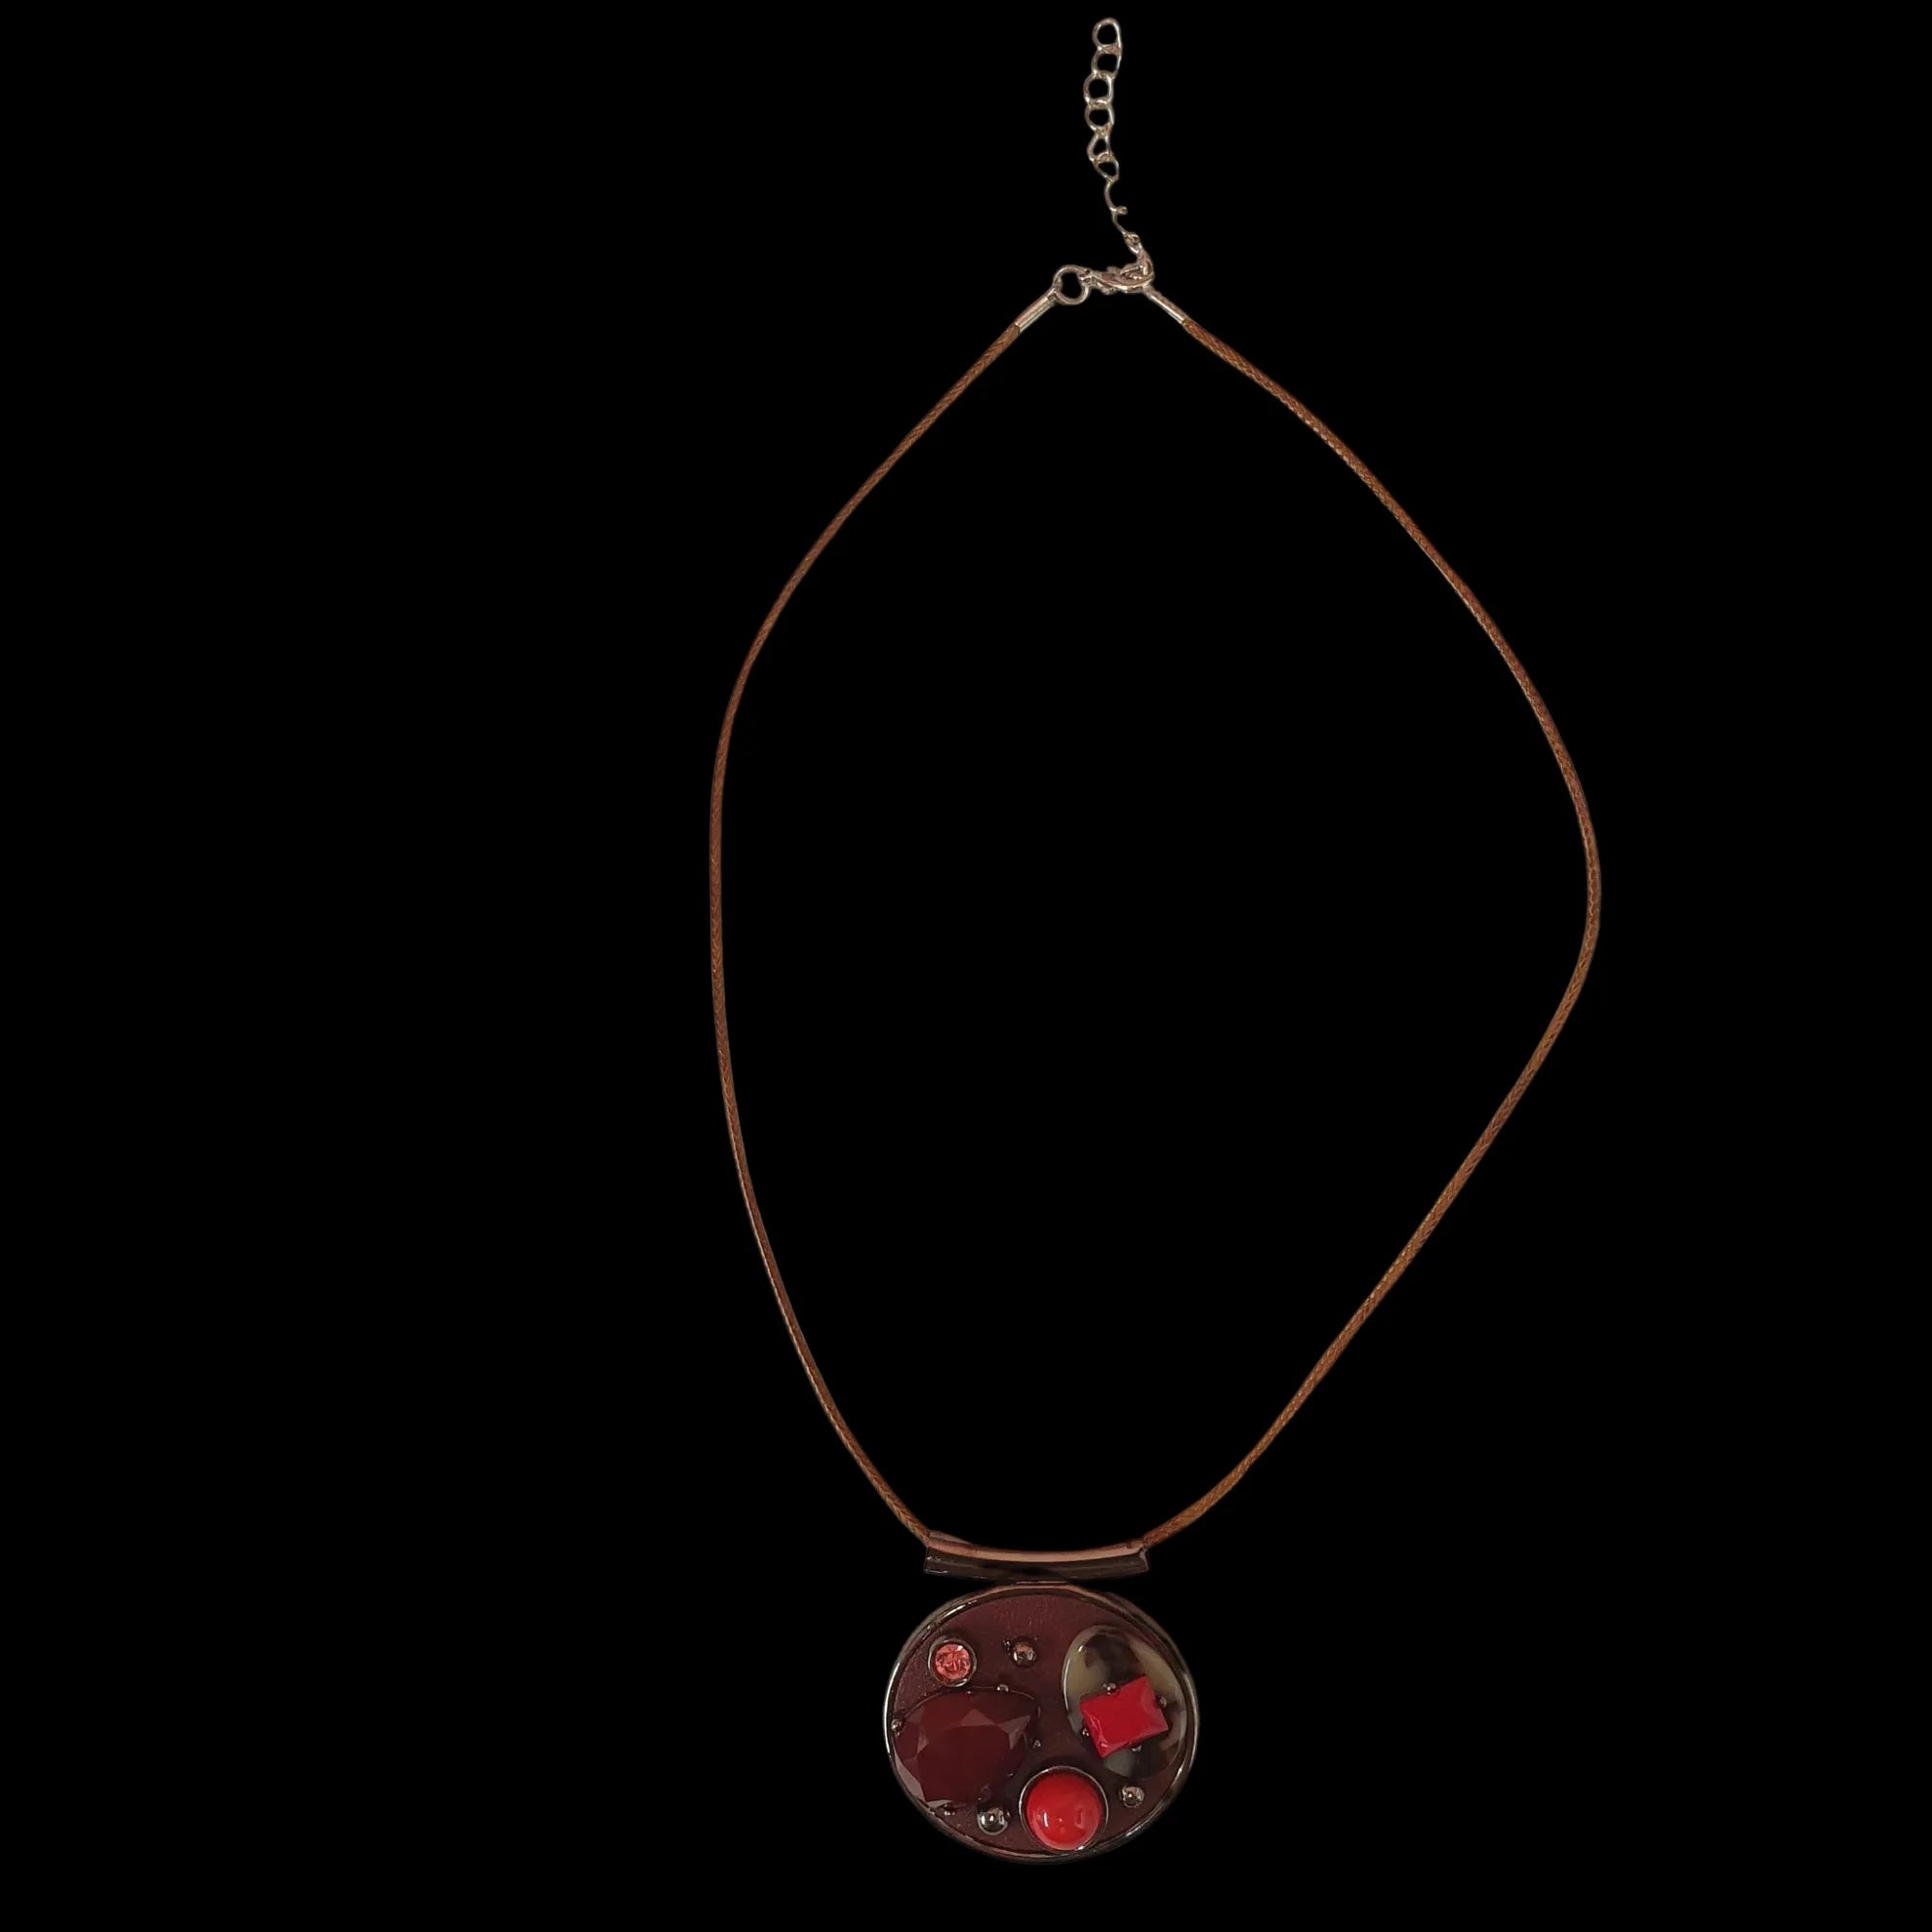 Multi Stone Design Necklace Pendant Charm Handmade Fashion